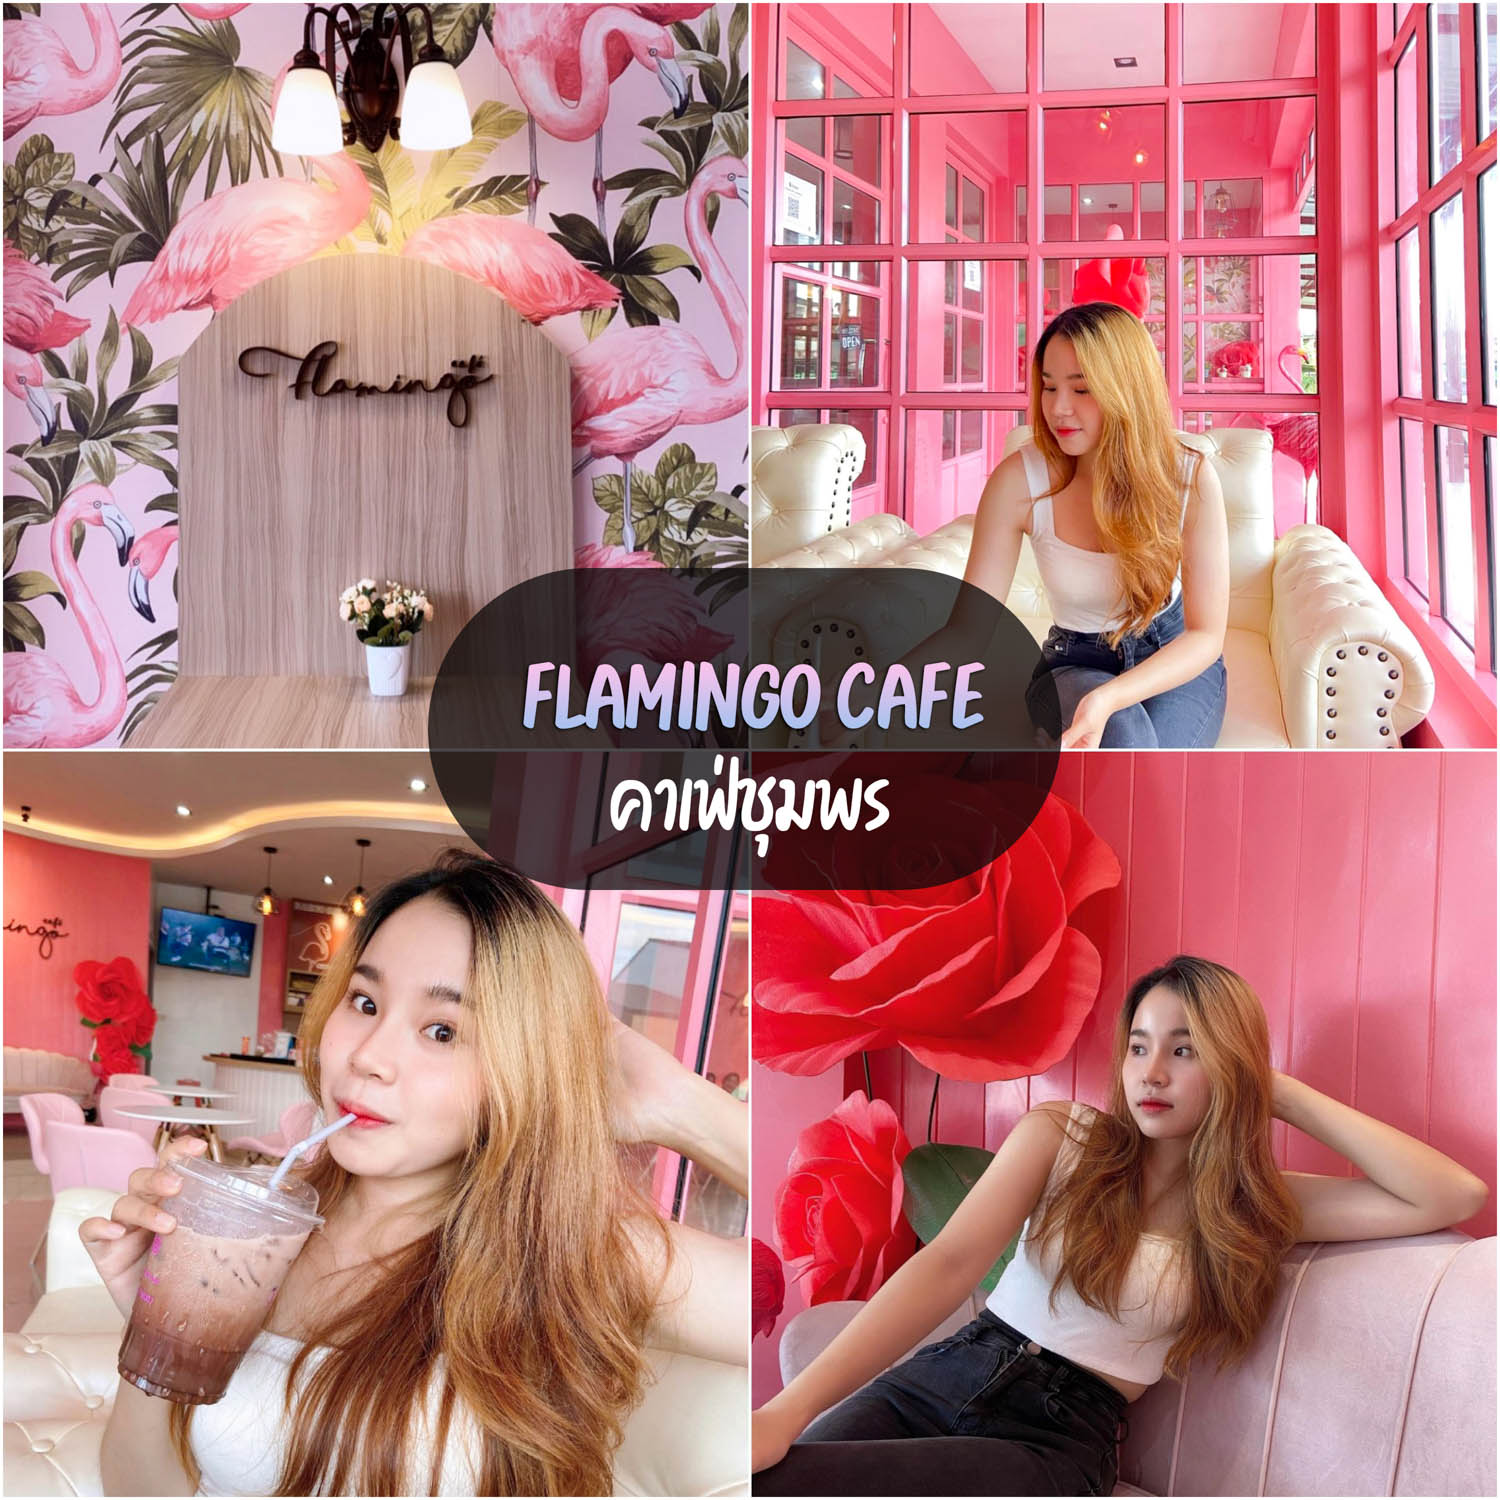 Flamingo cafe chumporn คาเฟ่ชุมพรสไตล์หวานๆ สีชมพู เก๋ๆชิคคูลๆไม่เหมือนใคร